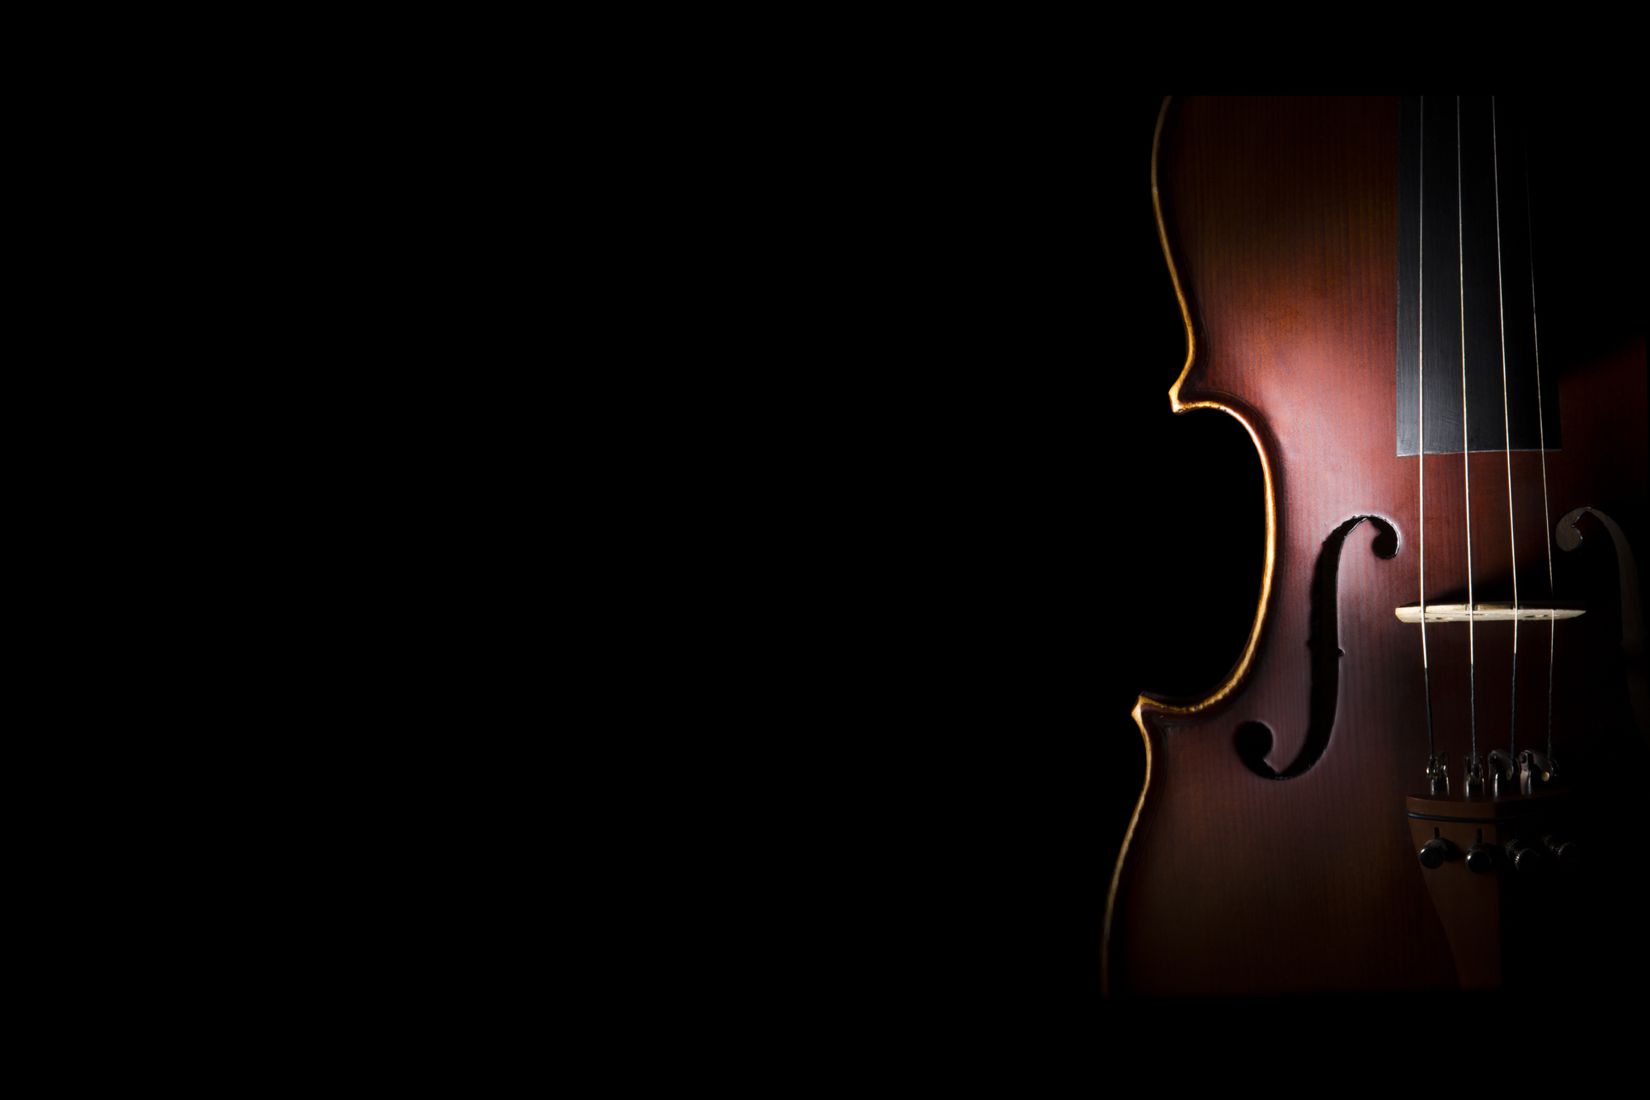 Violin in a dark setting